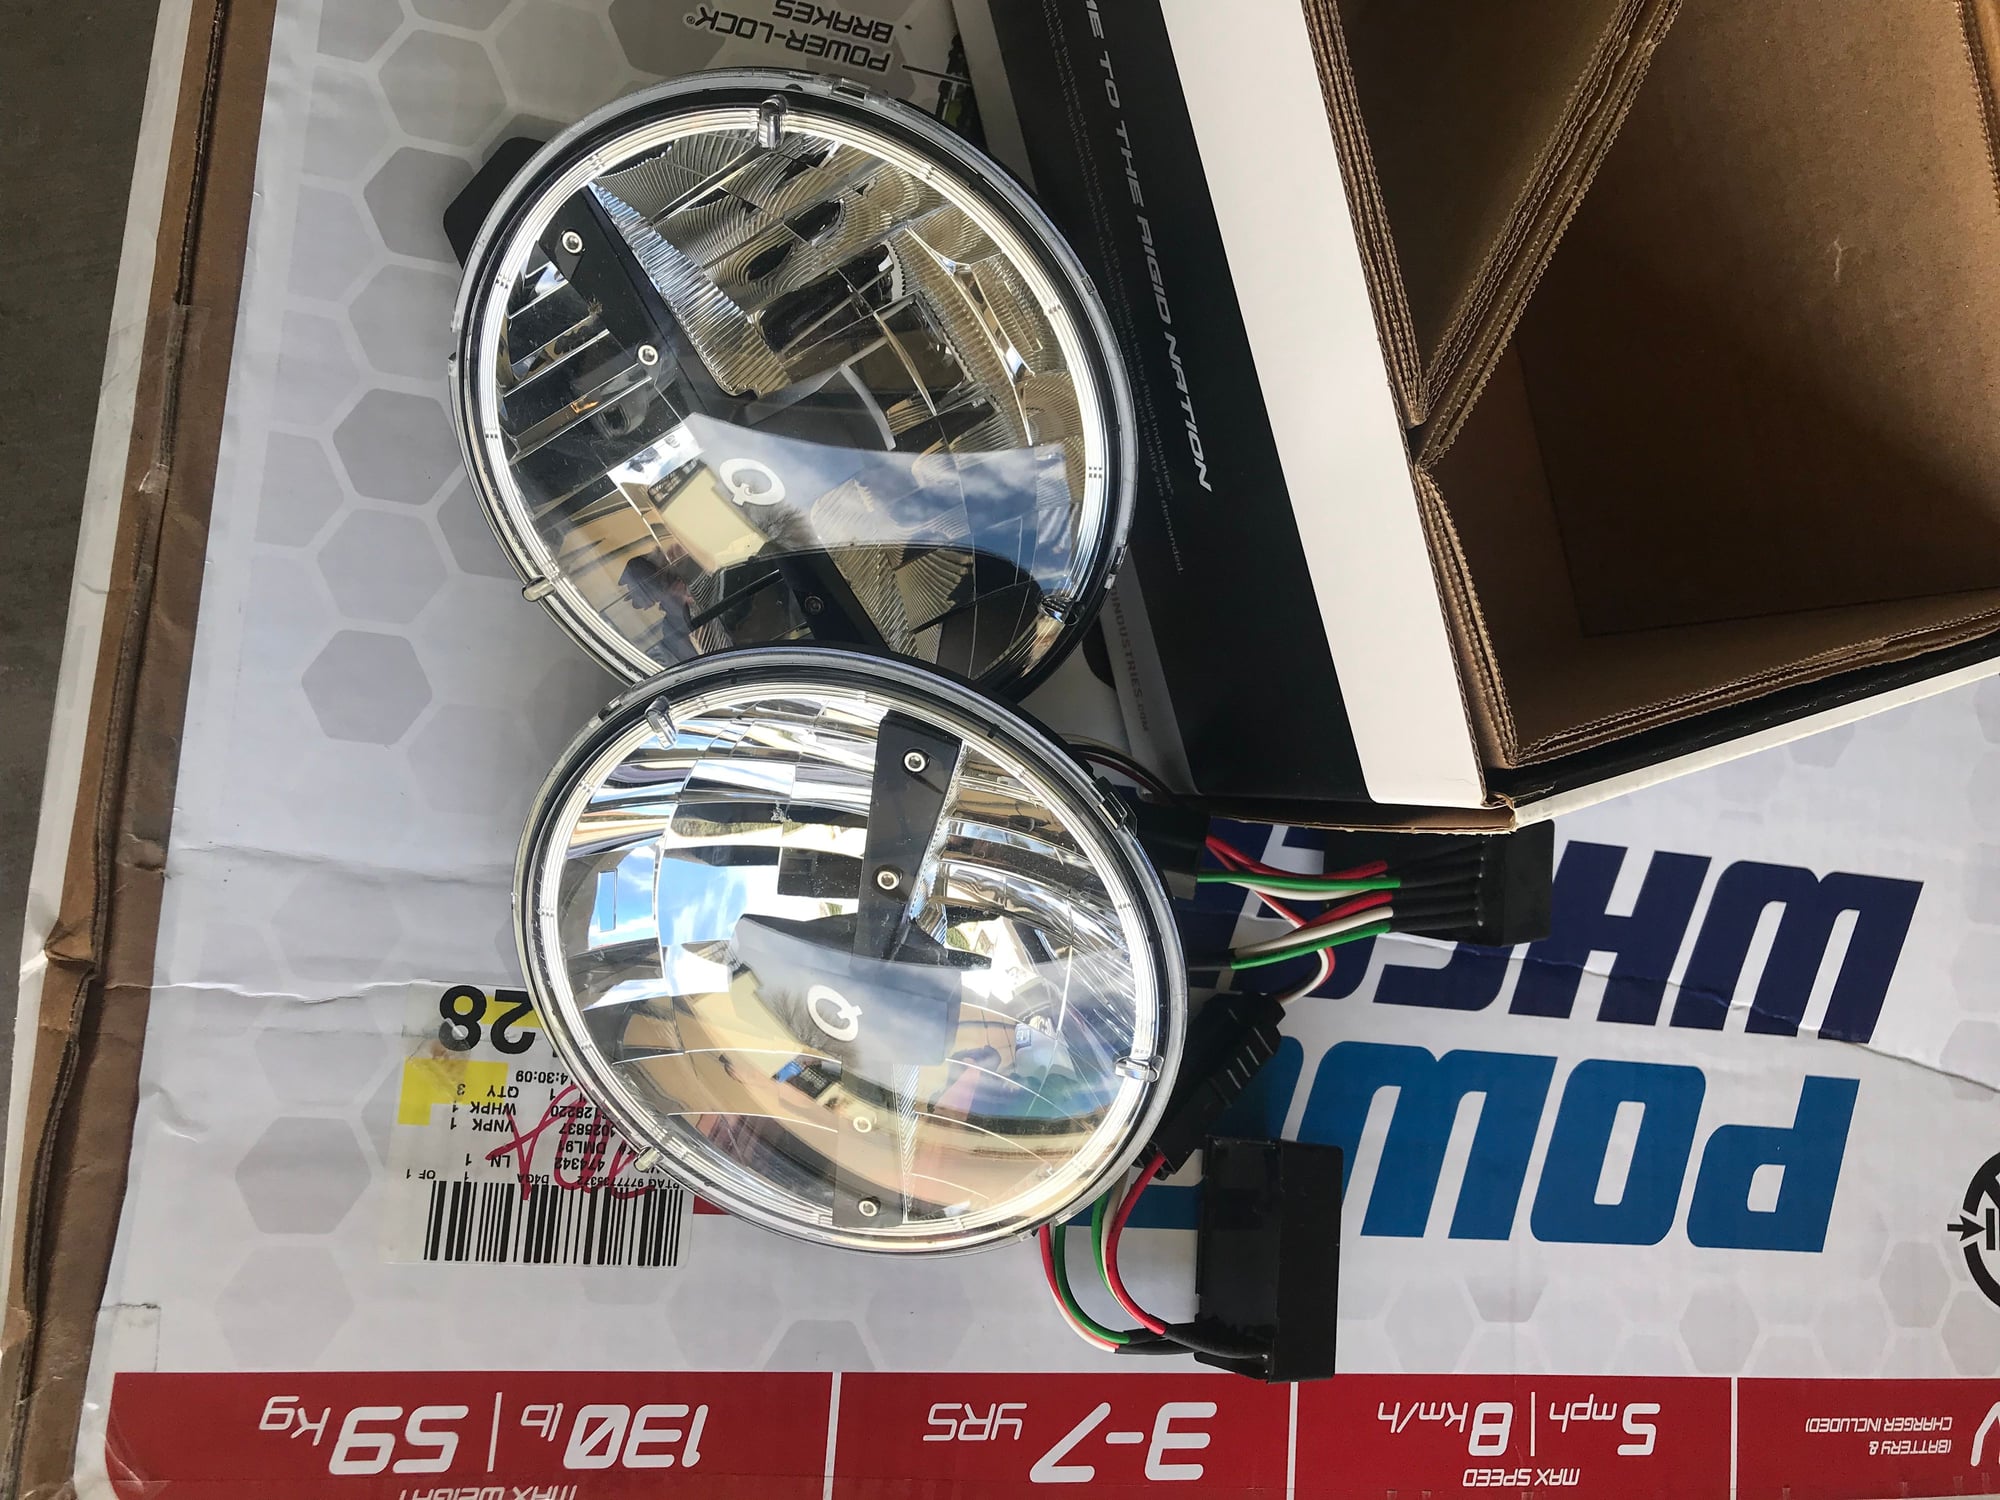 Lights - Qudratec gen II led headlights - Used - 1997 to 2018 Jeep Wrangler - Nogales, AZ 85621, United States